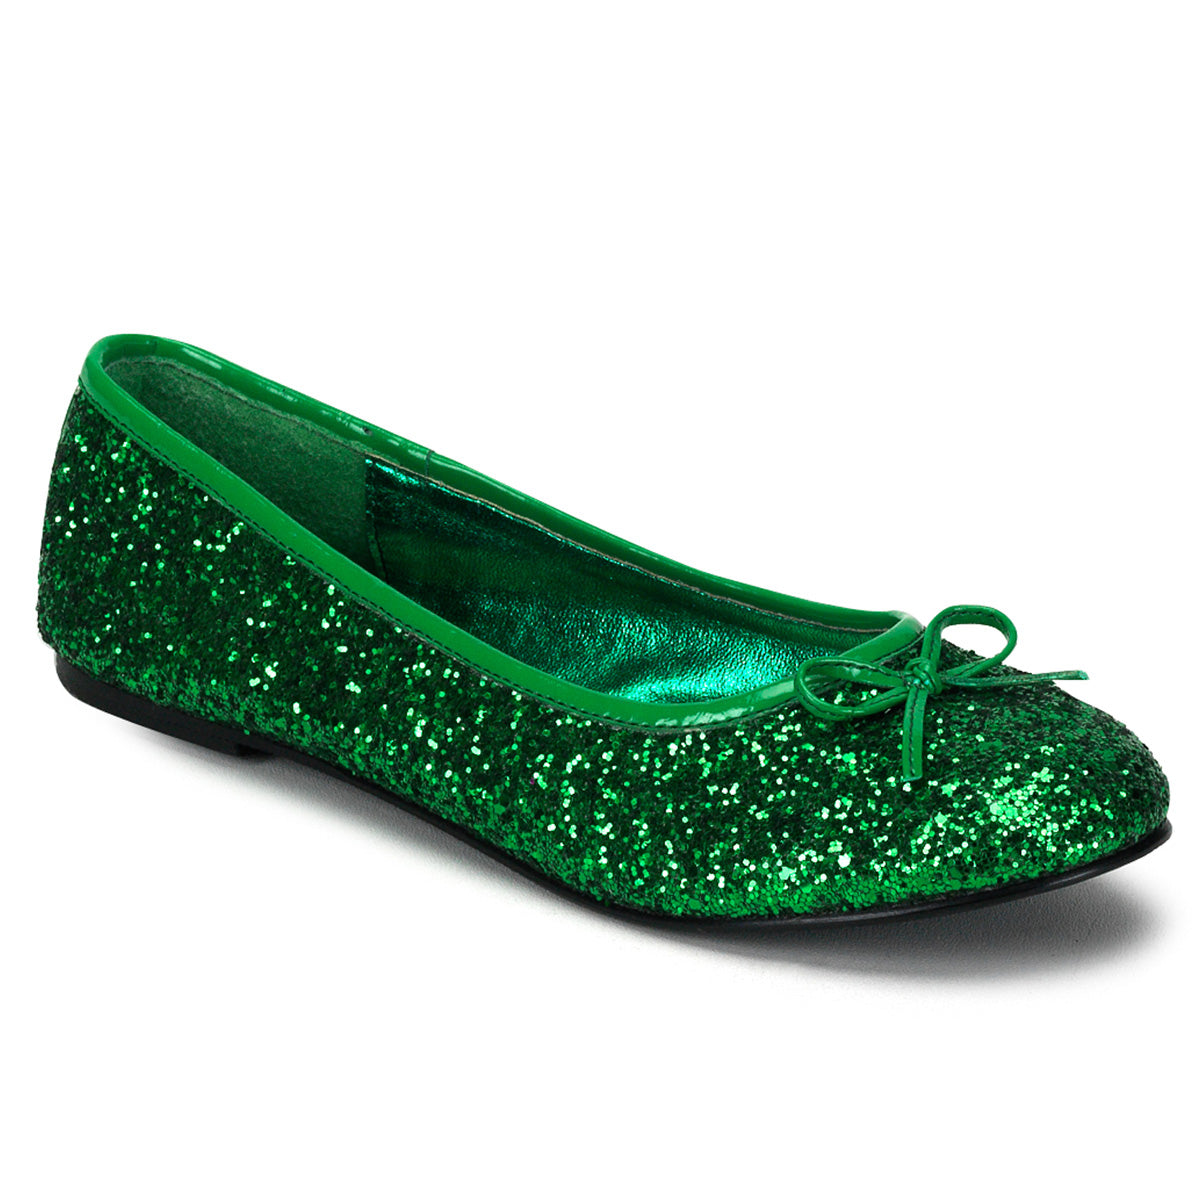 STAR-16G Funtasma Green Glitter Women's Costume Shoes Funtasma Costume Shoes